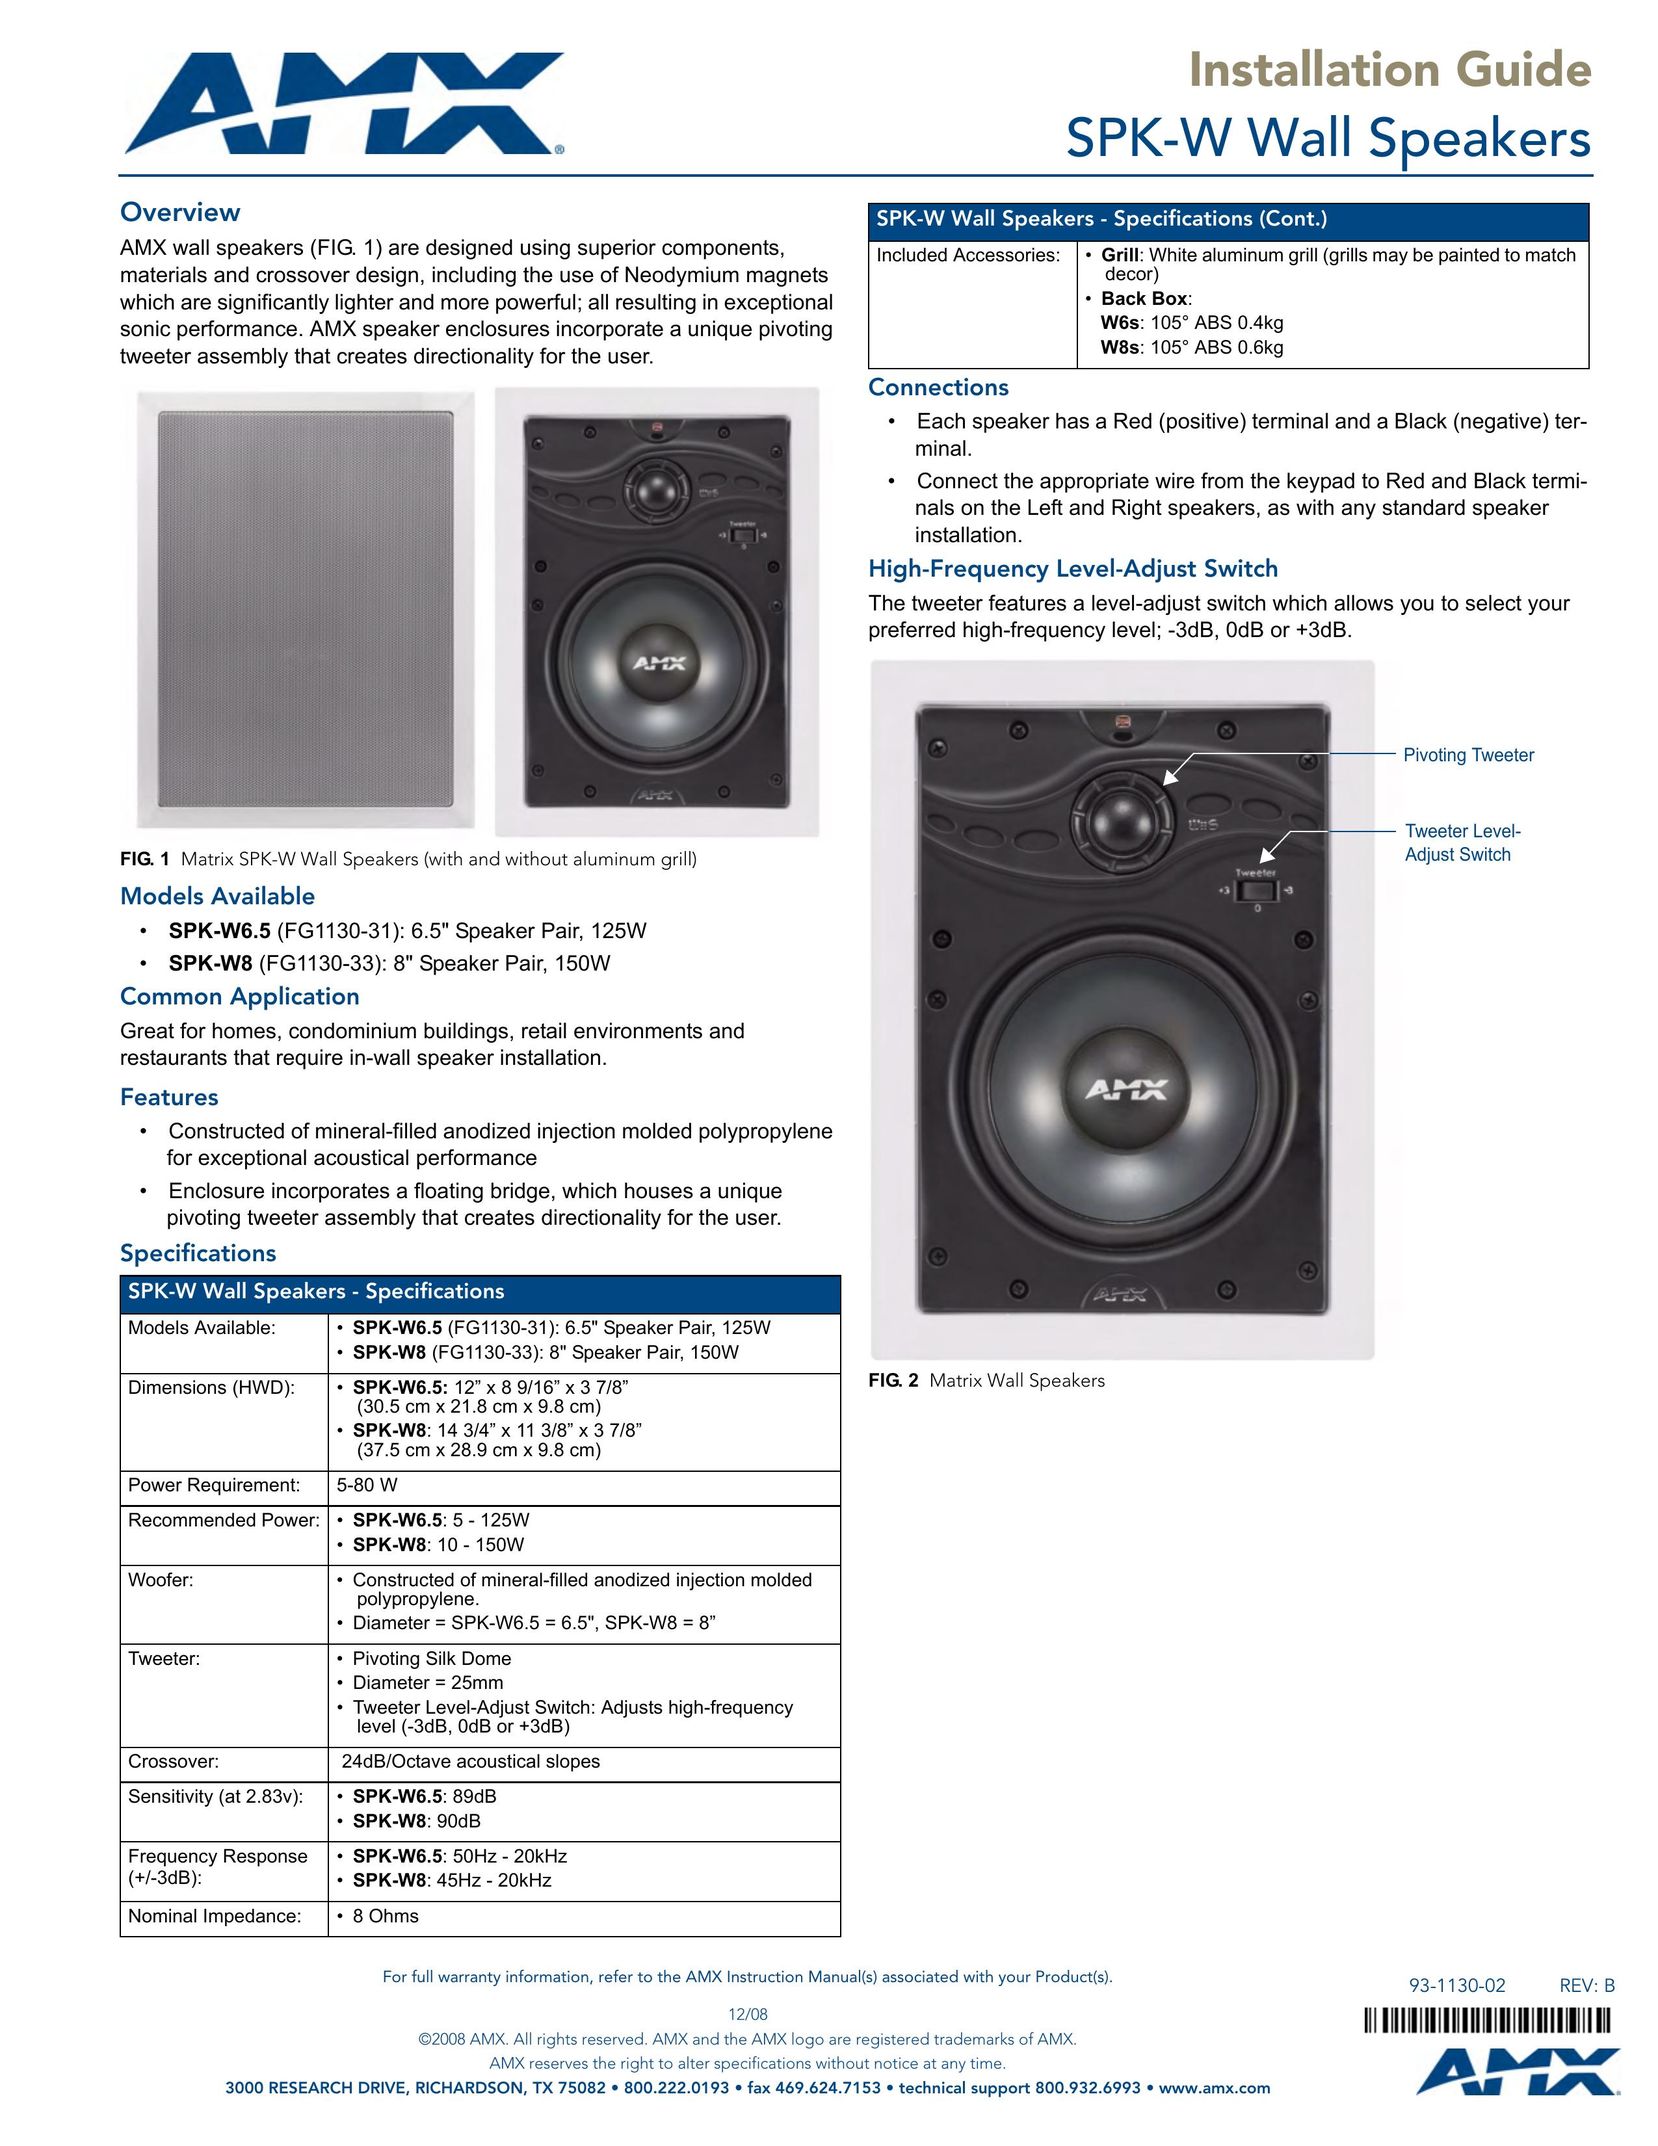 AMX SPK-W Speaker User Manual